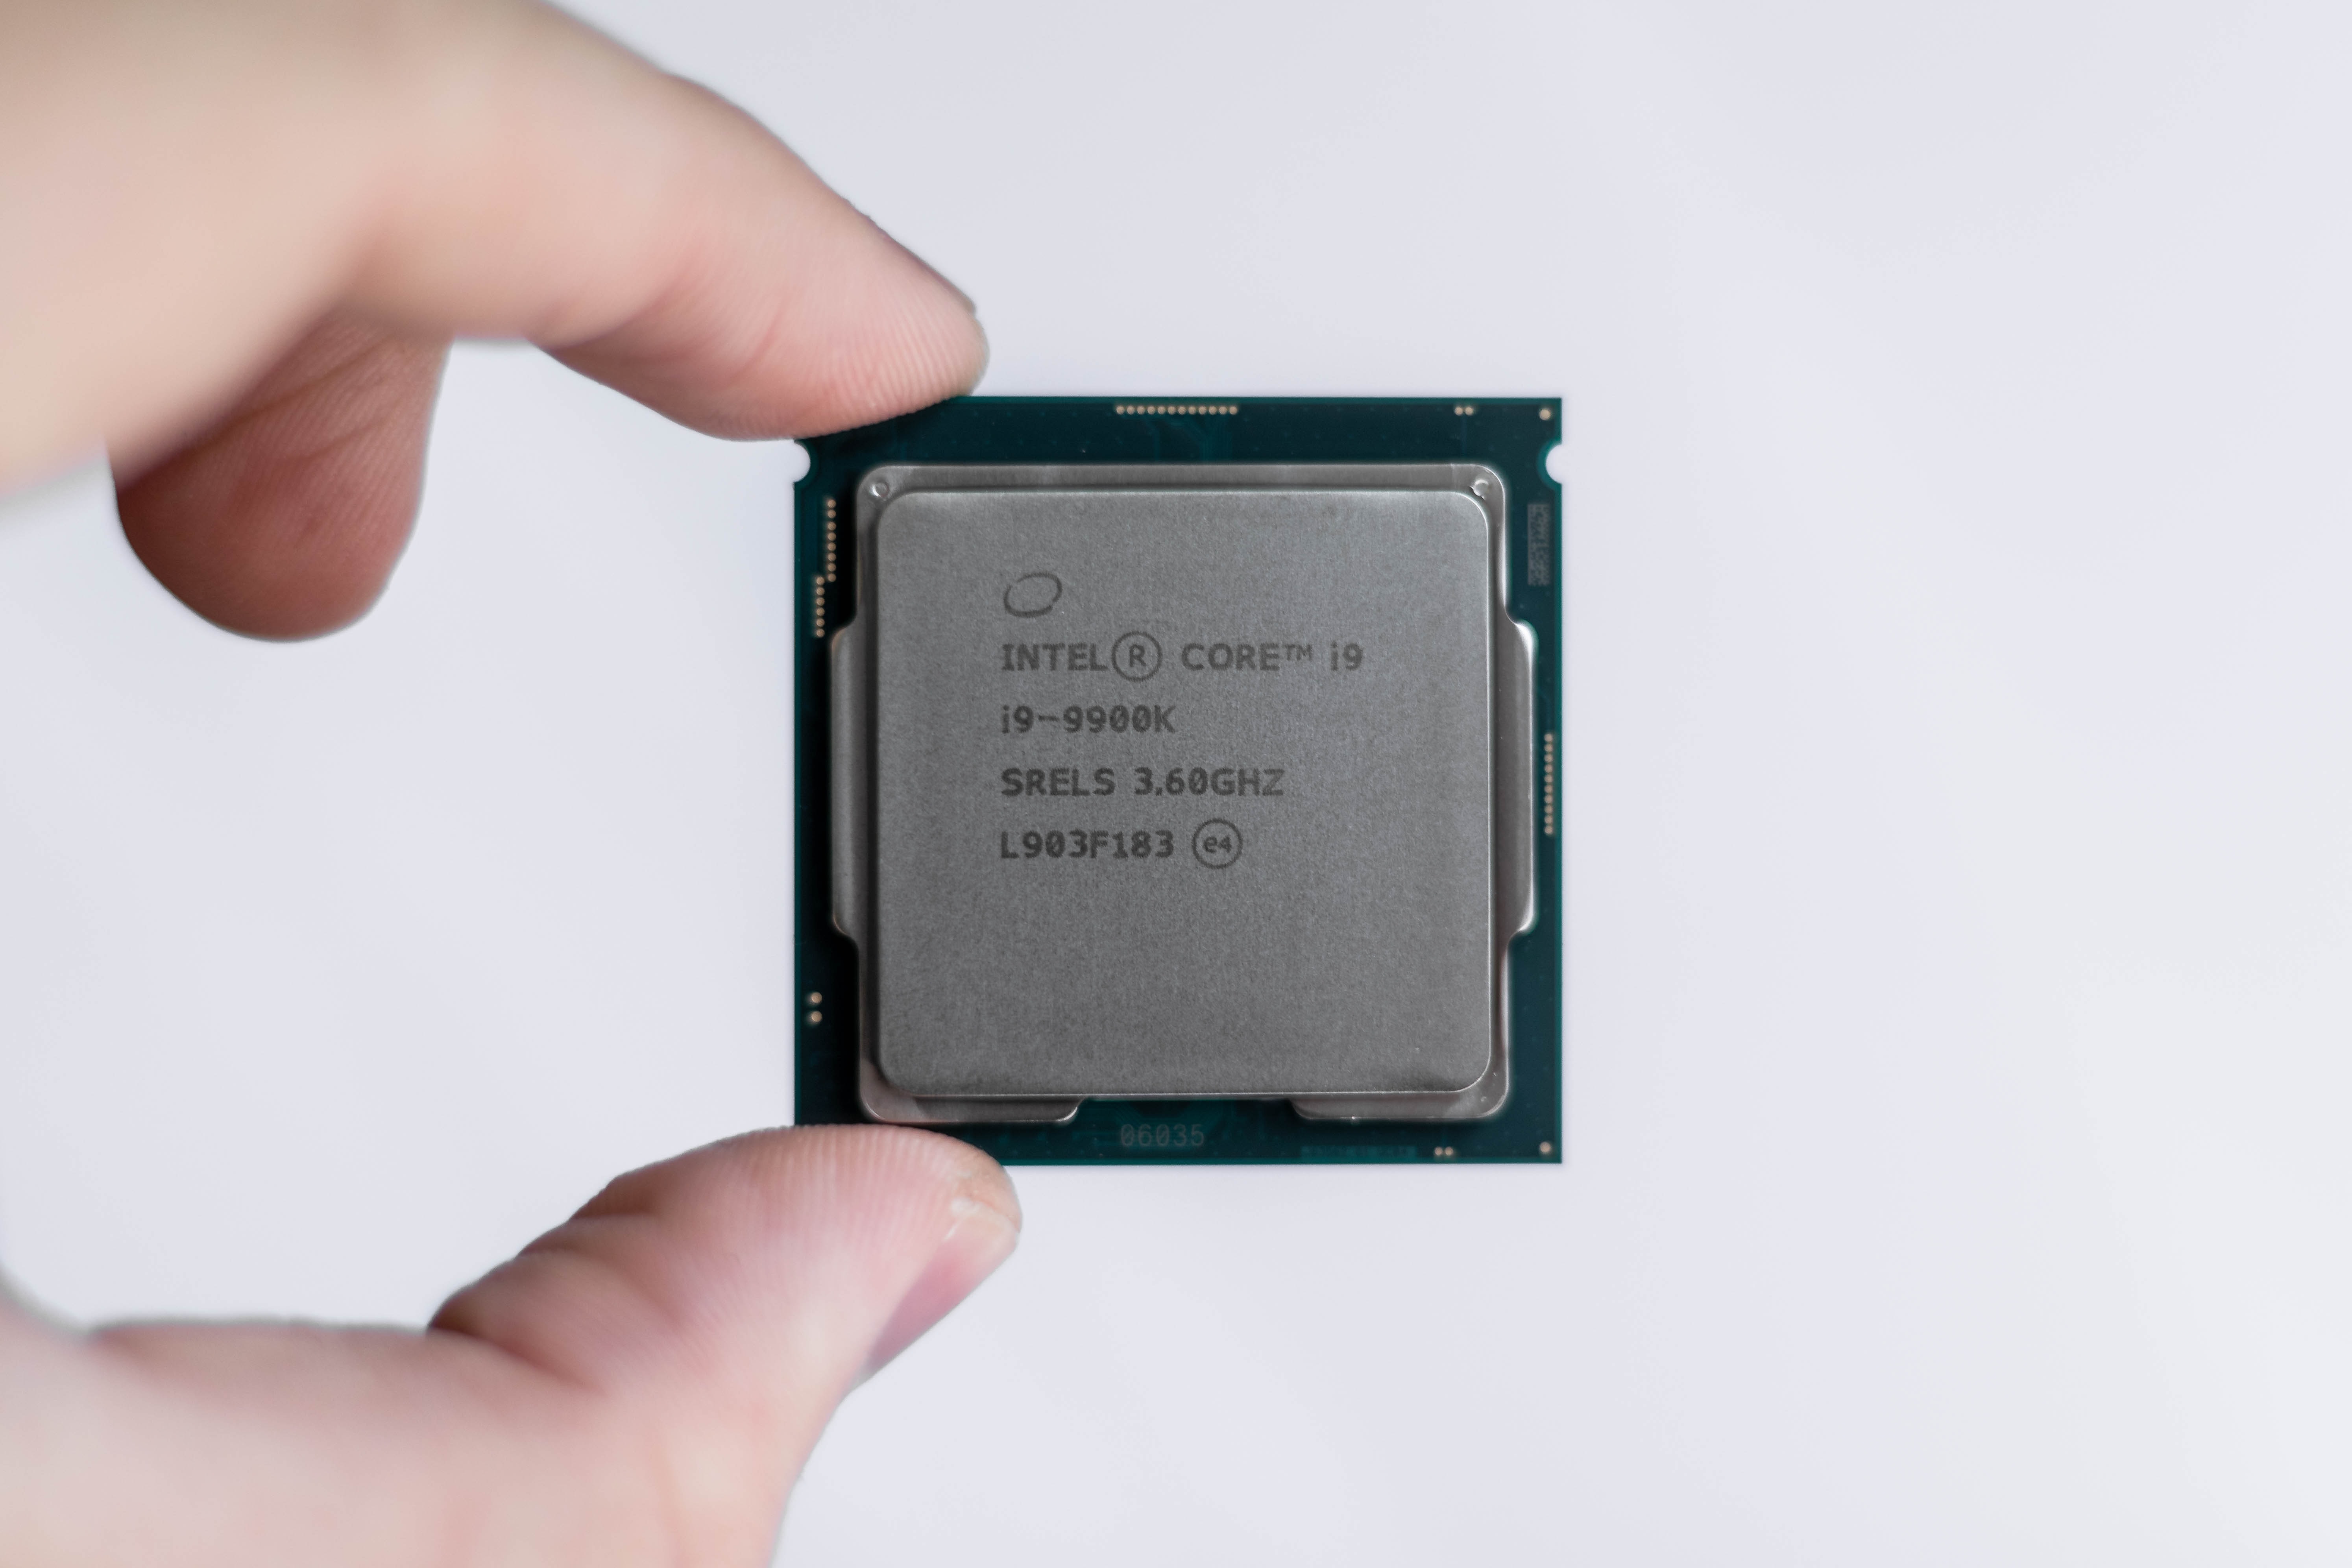 Intel/AMD Turbo Boost